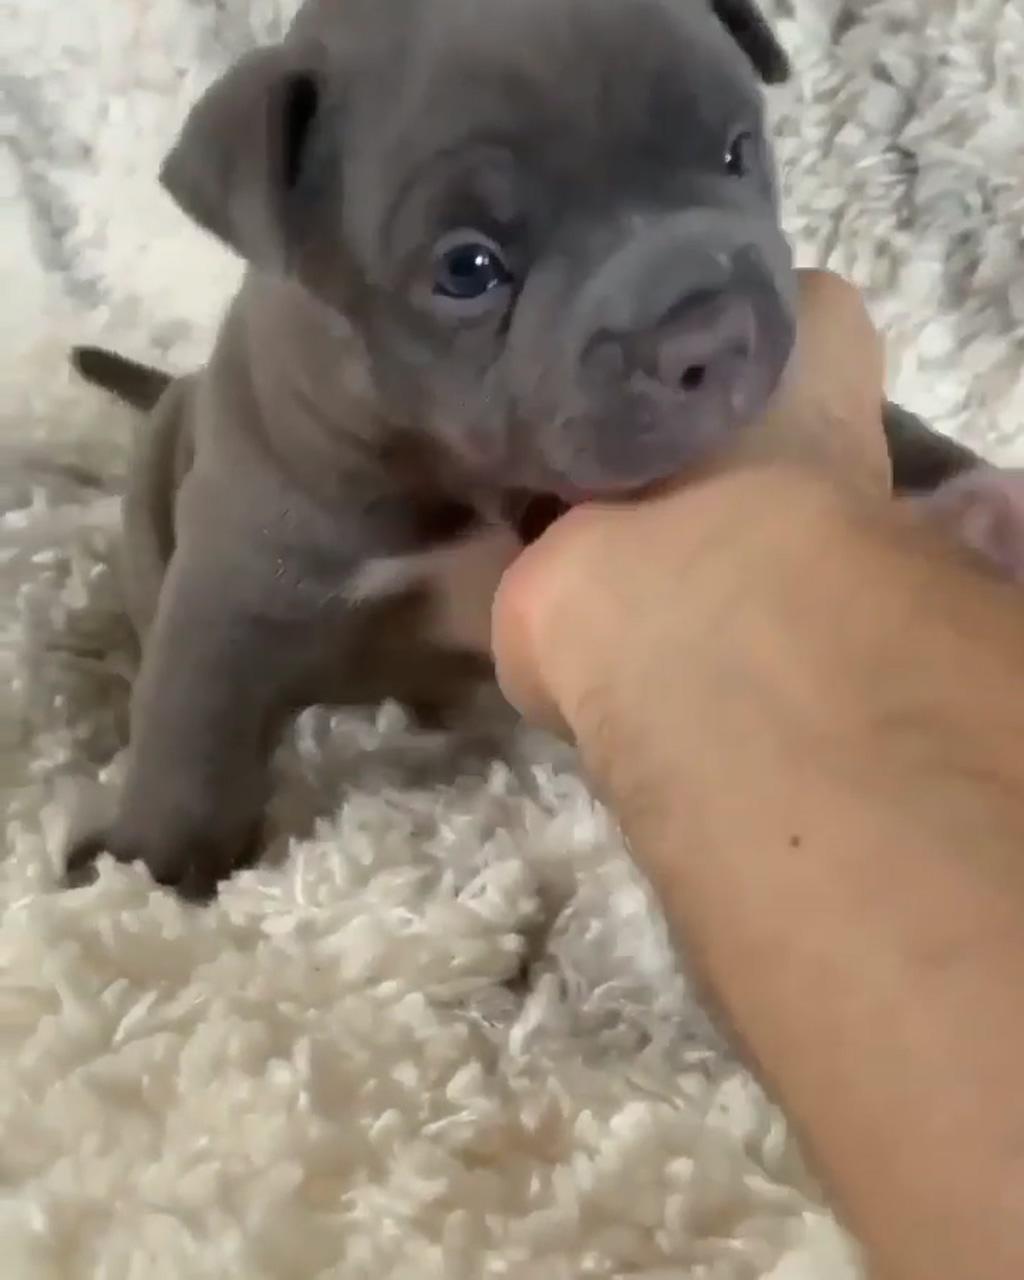 Pitbull; cute animals images